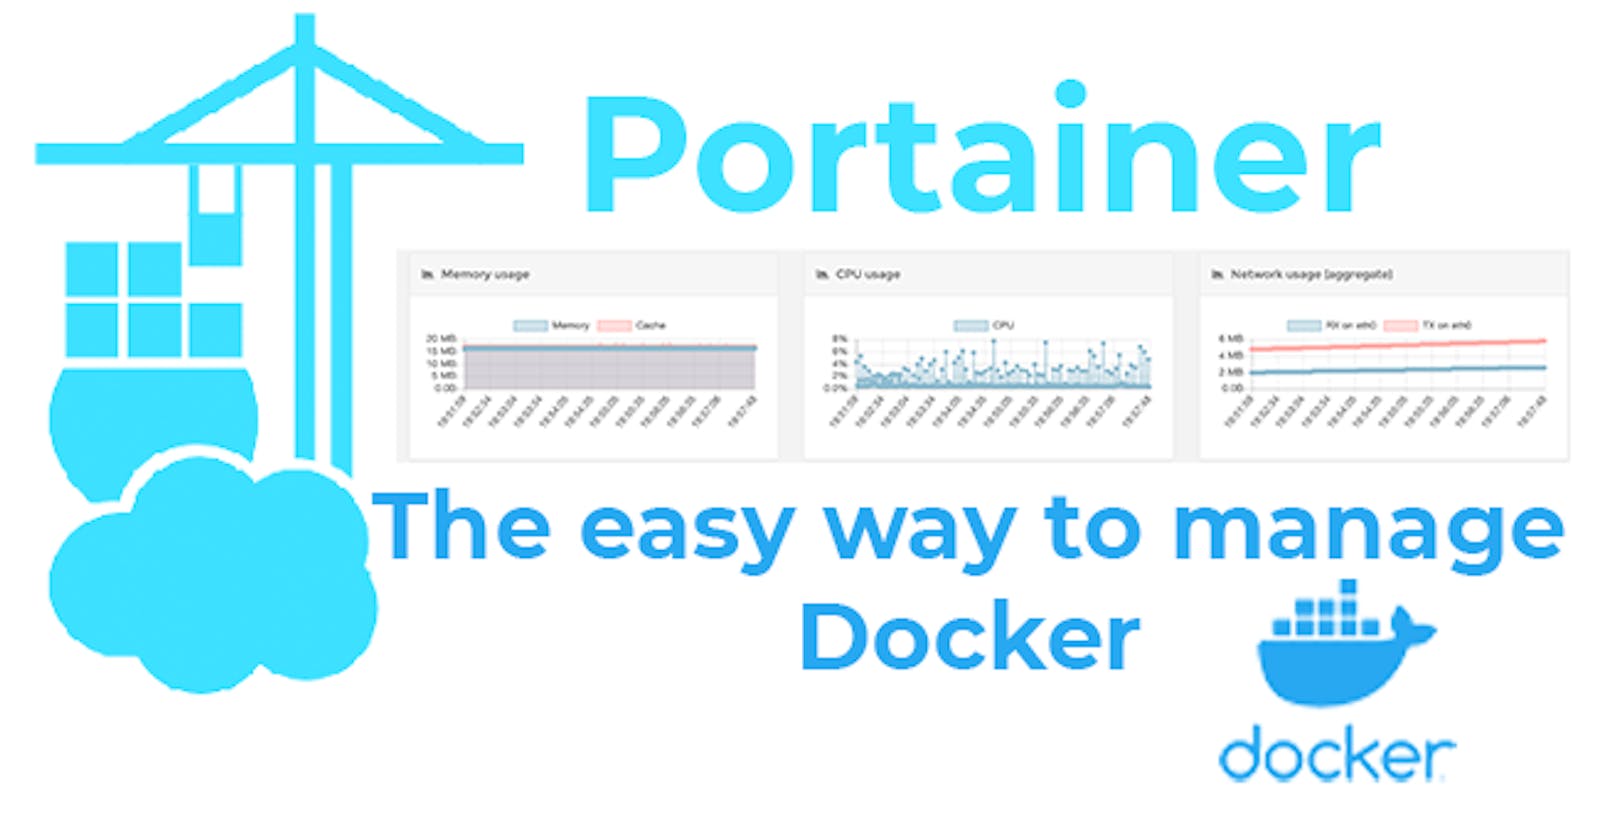 Docker visual manager: Portrainer